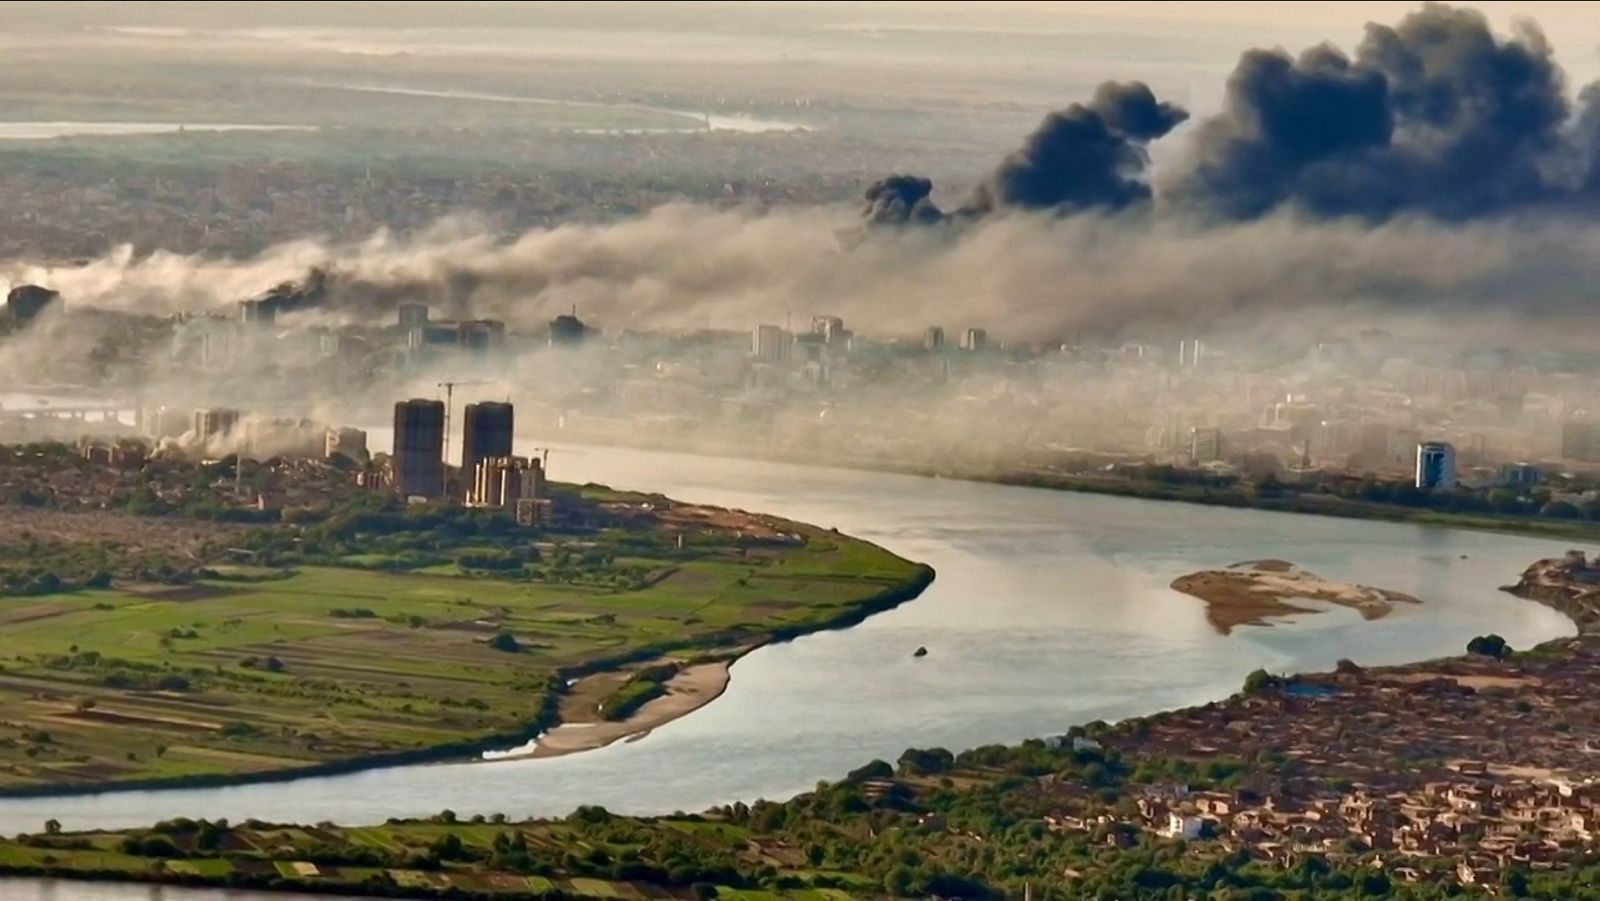 Esta imagen muestra una vista aérea del humo negro que cubre el cielo de la capital, Jartum